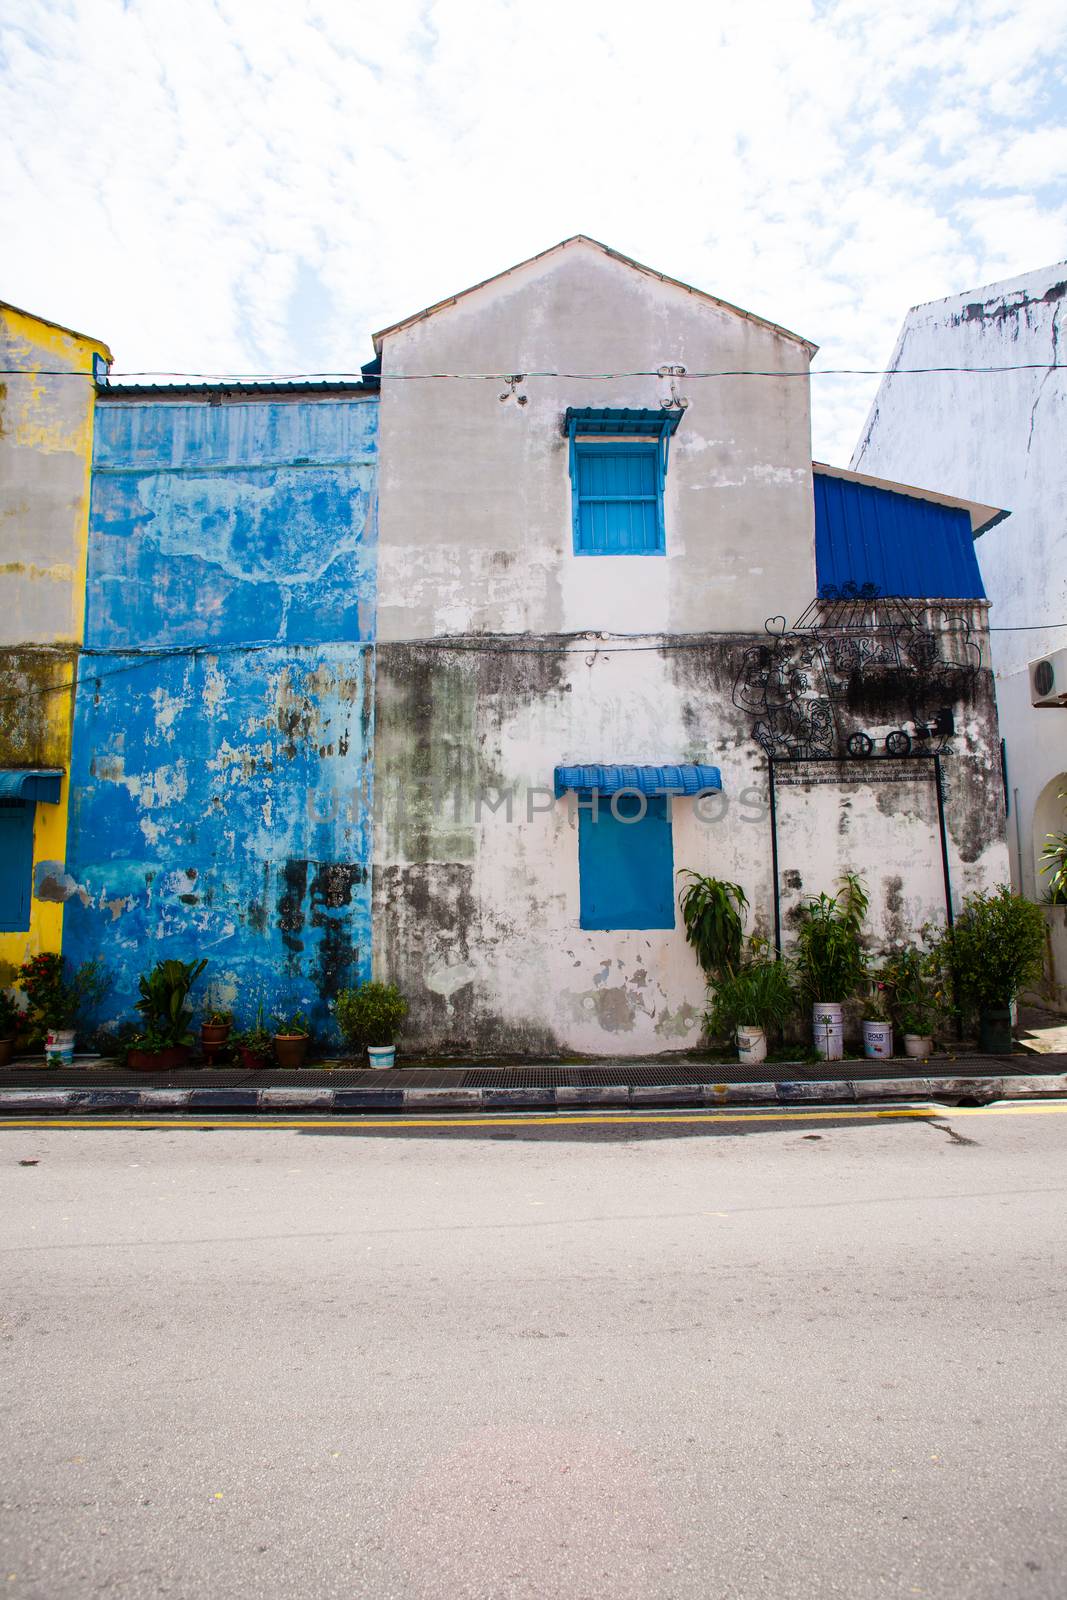 Penang, Malaysia architecture narrow streets. Dirty moldy humidity wall on cityscape